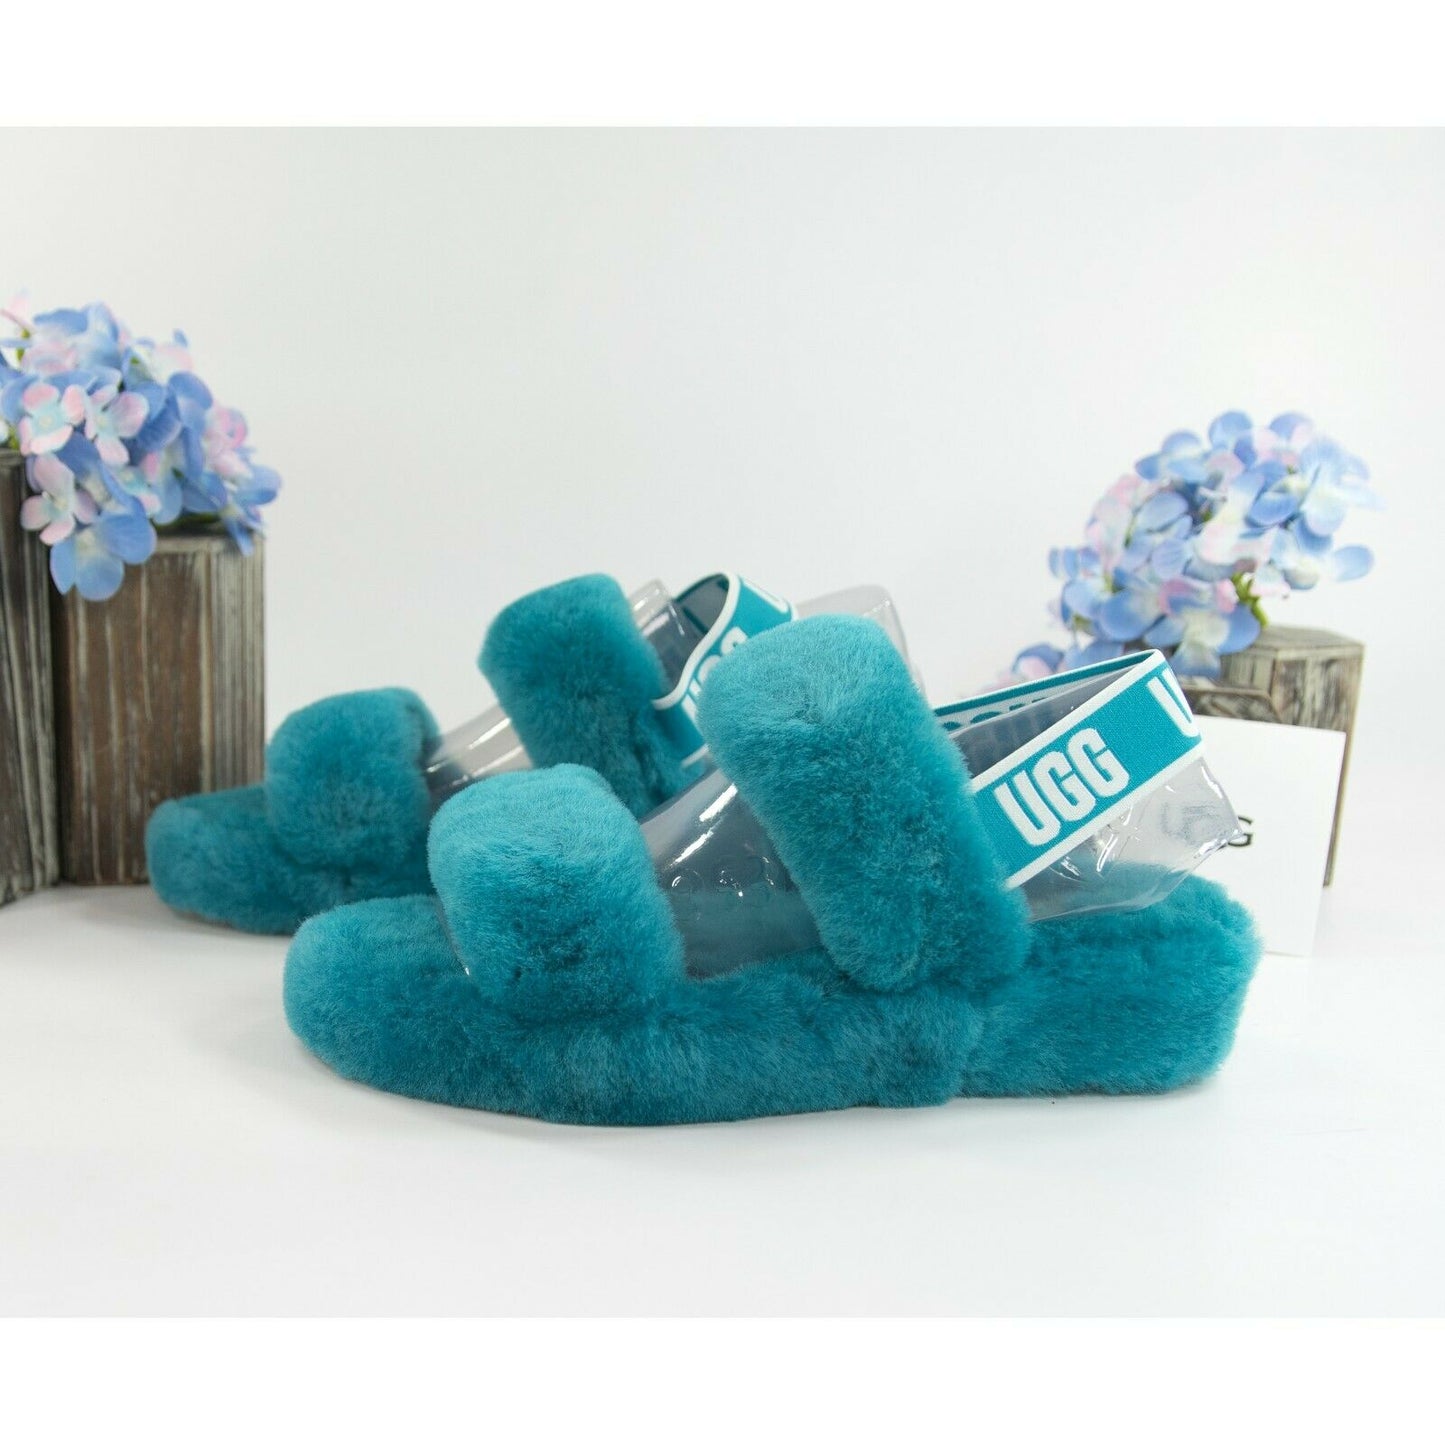 UGG Fluff Oh Yea Aqua Blue Sheepskin Fur Slippers Slides Sandals Sz 7 NIB